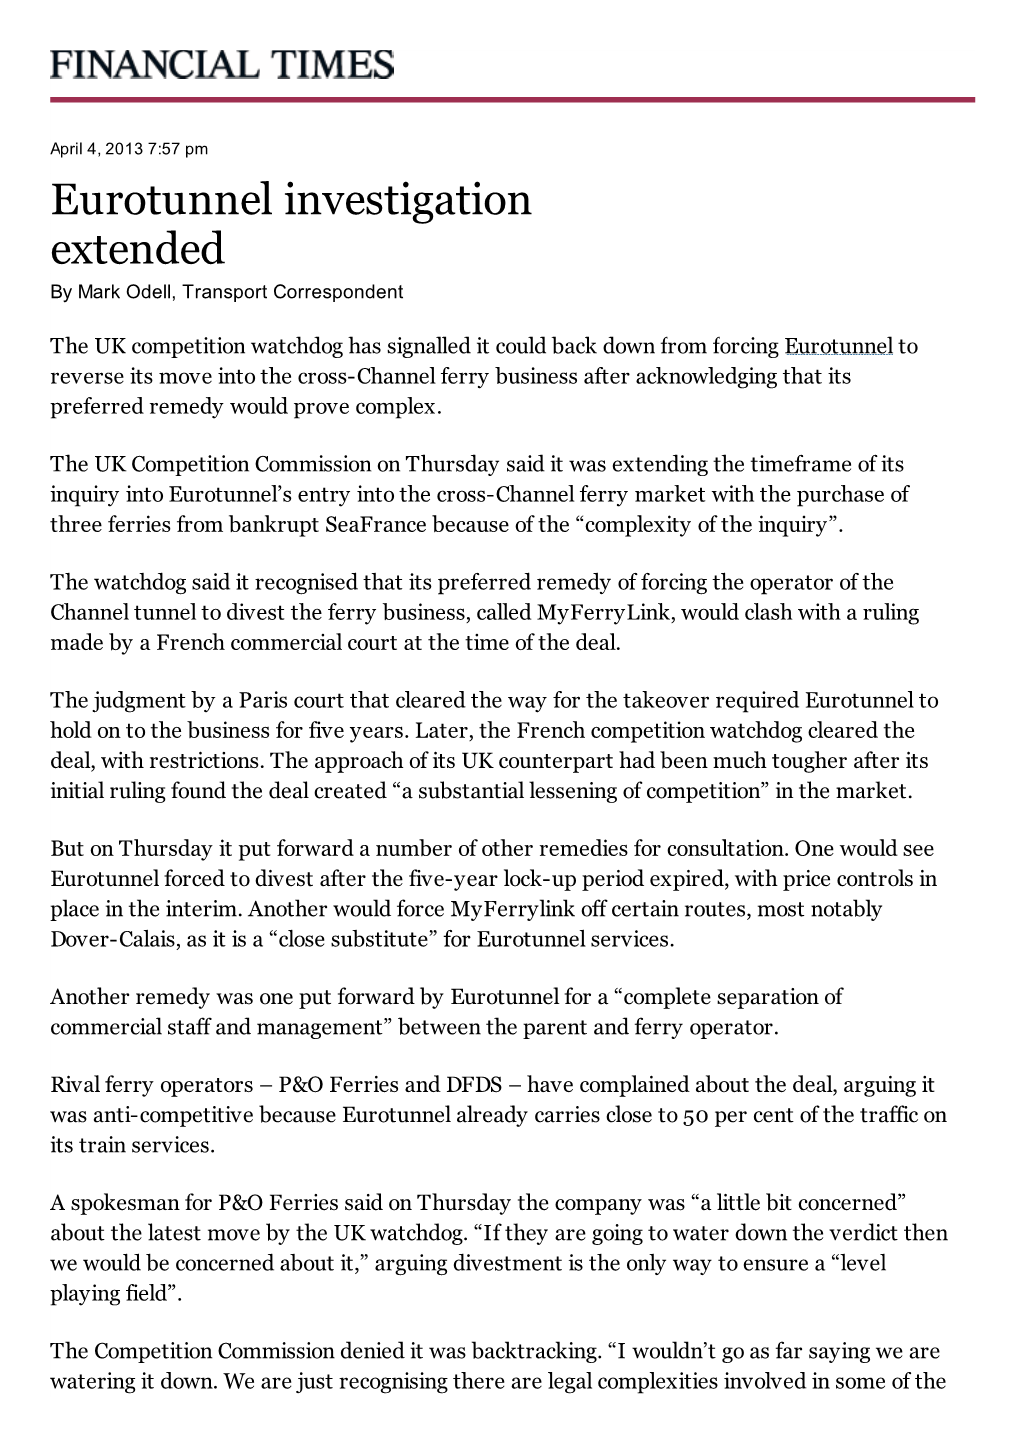 Eurotunnel Investigation Extended by Mark Odell, Transport Correspondent